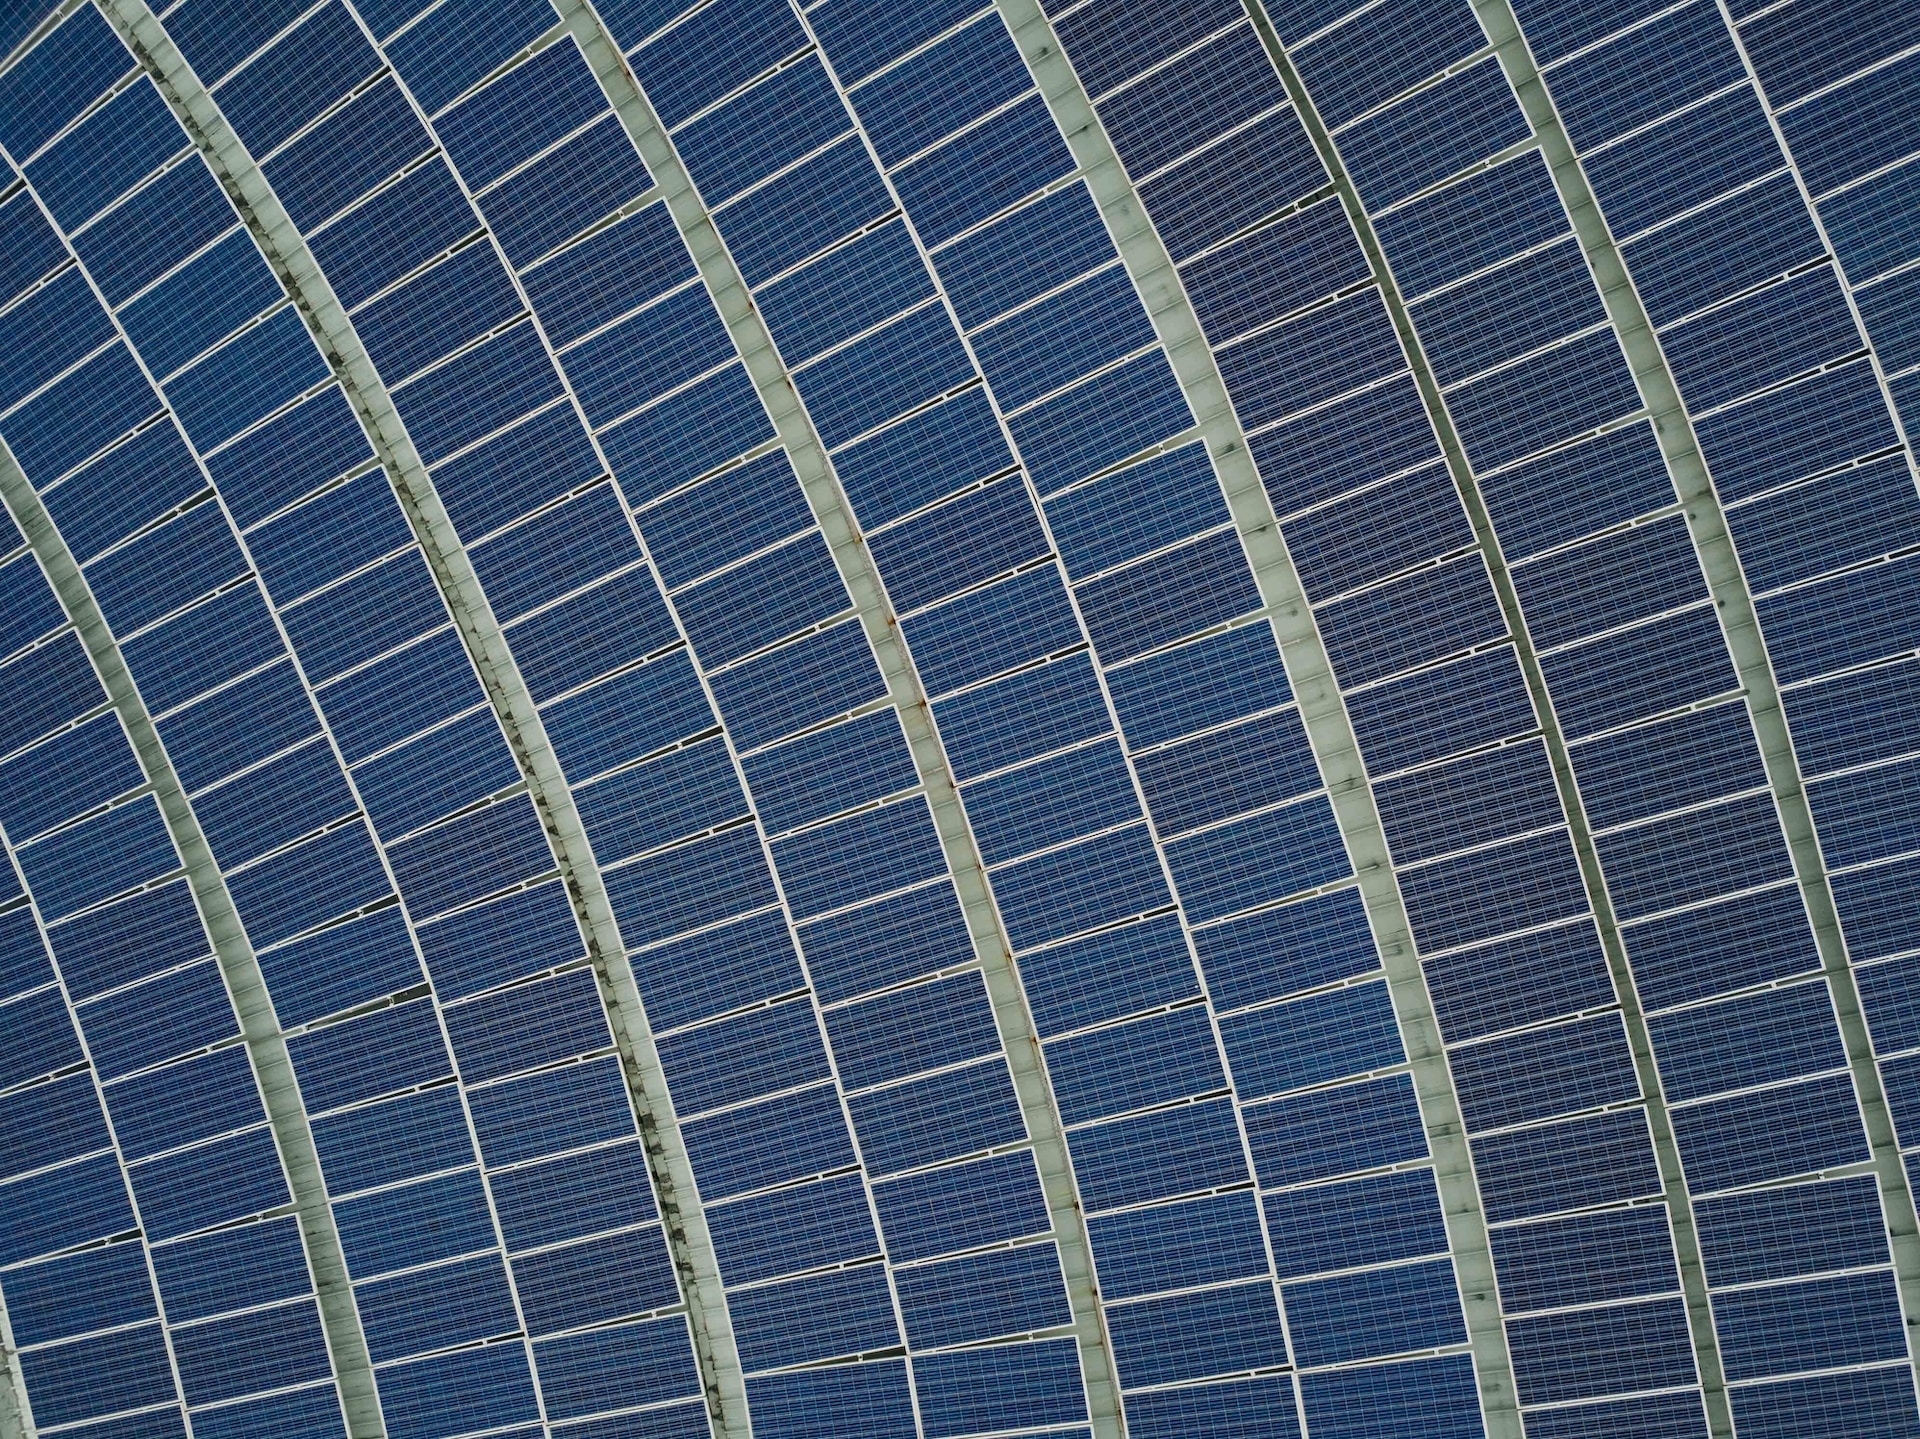 Birds-eye view of solar panels